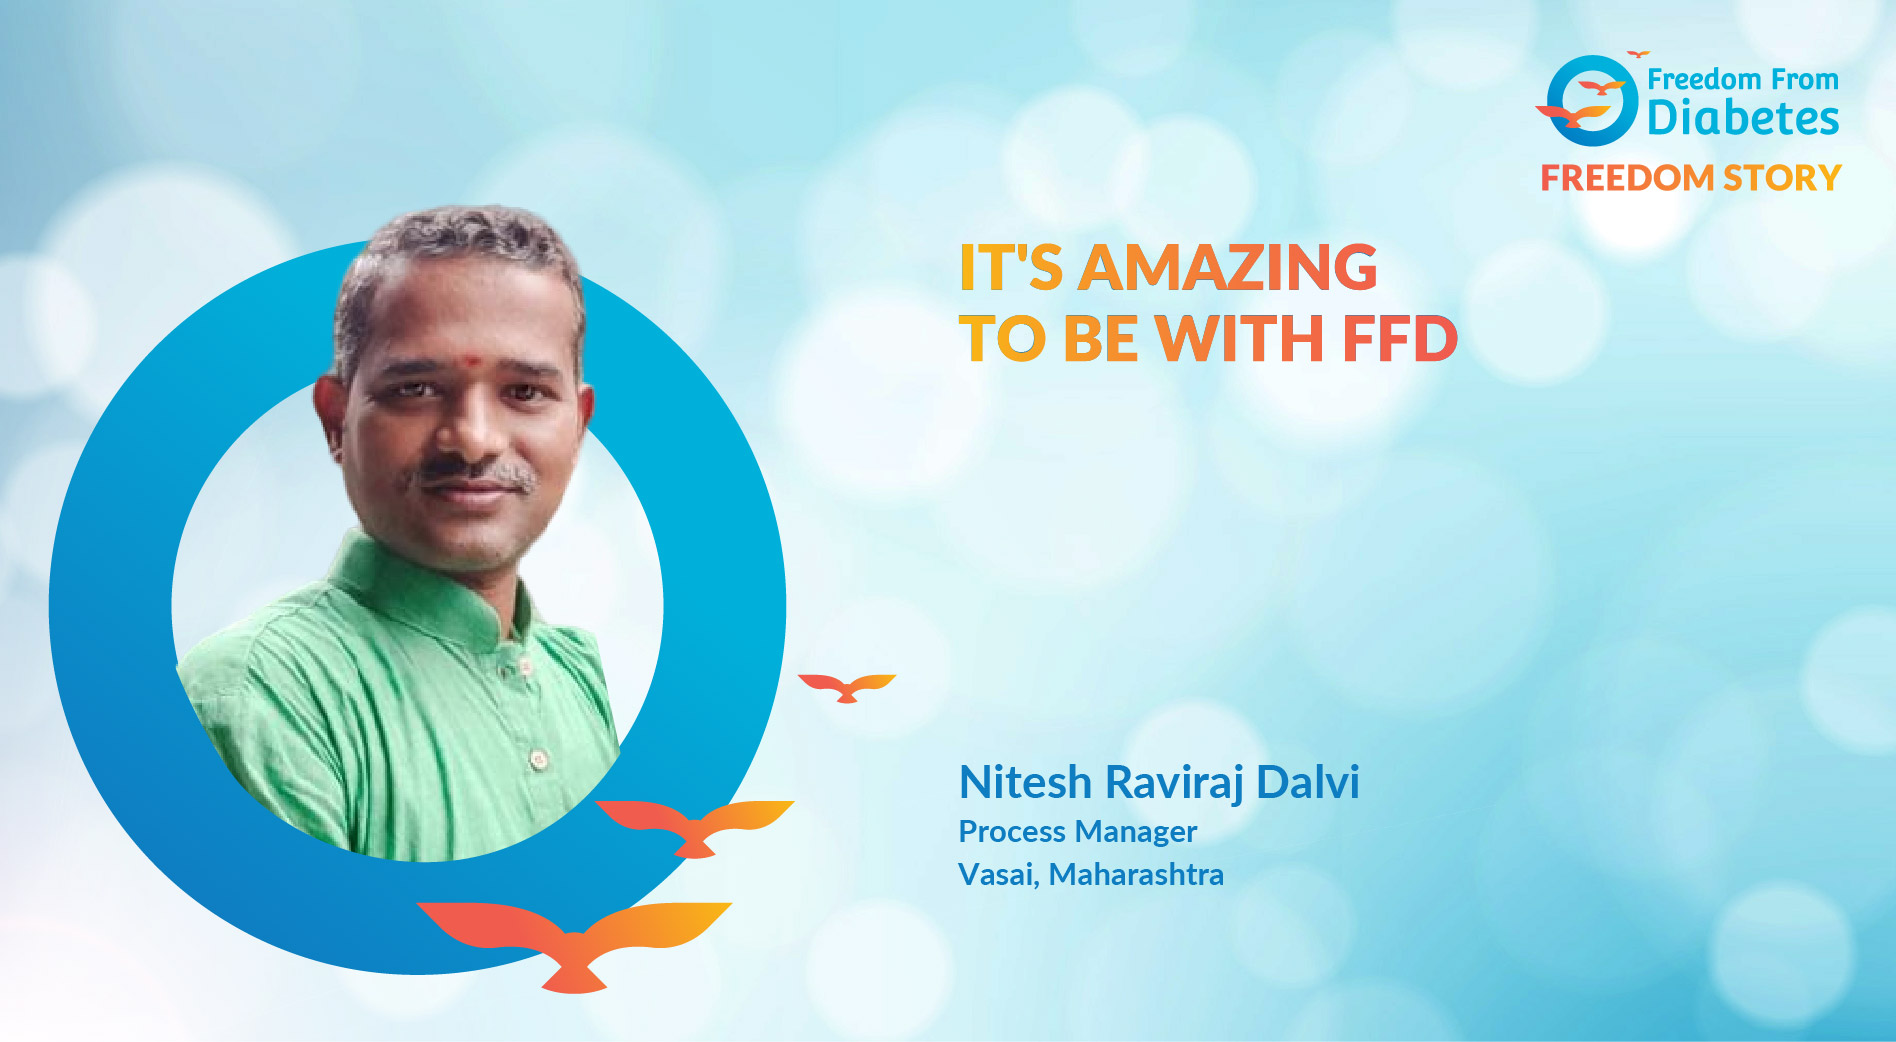 Nitesh Raviraj Dalvi: A big HbA1c drop from 12 to 6.3... with FFD